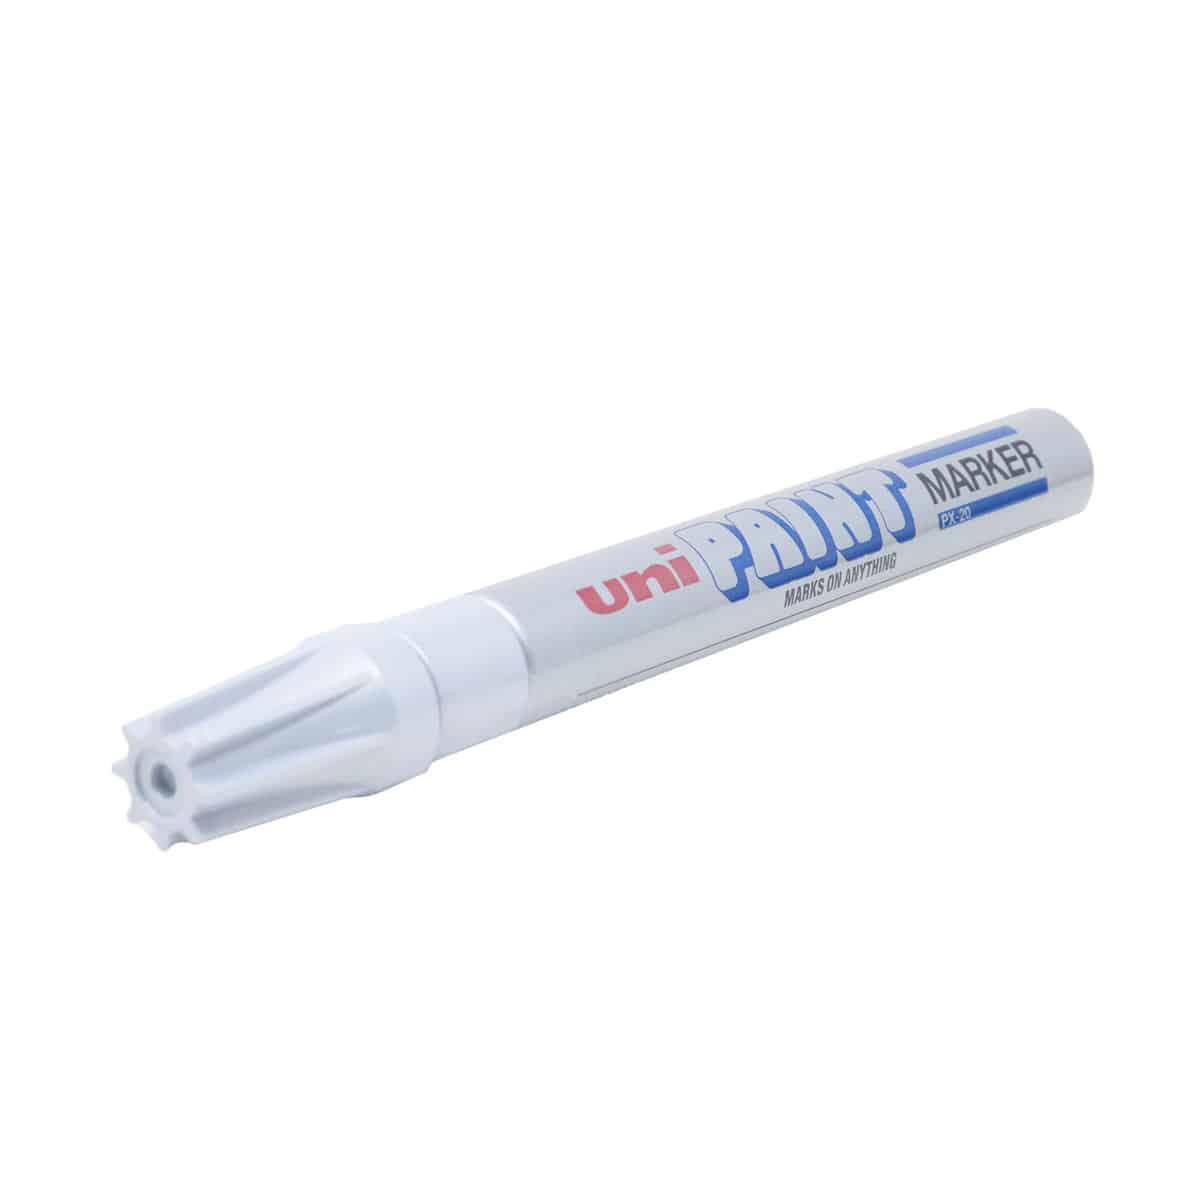 Silver Uni Paint Marker PX-20 Medium Point